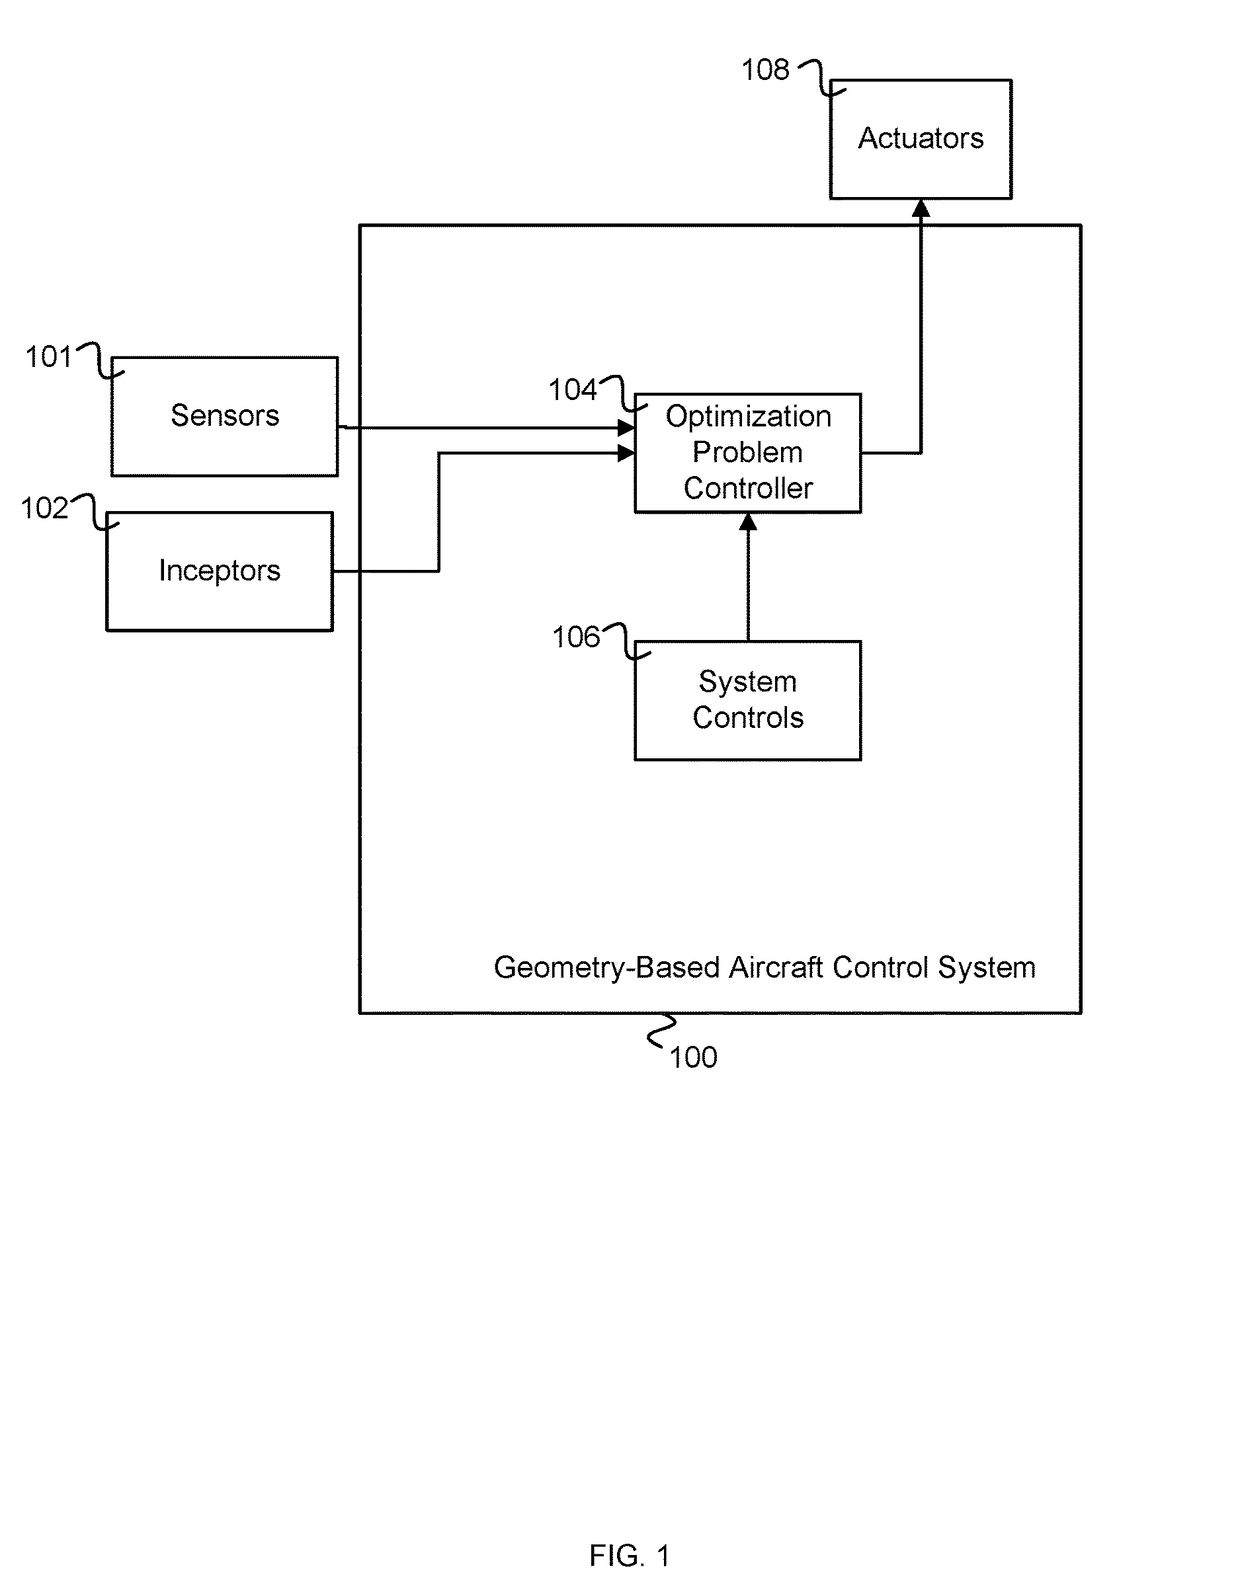 Geometry-based flight control system